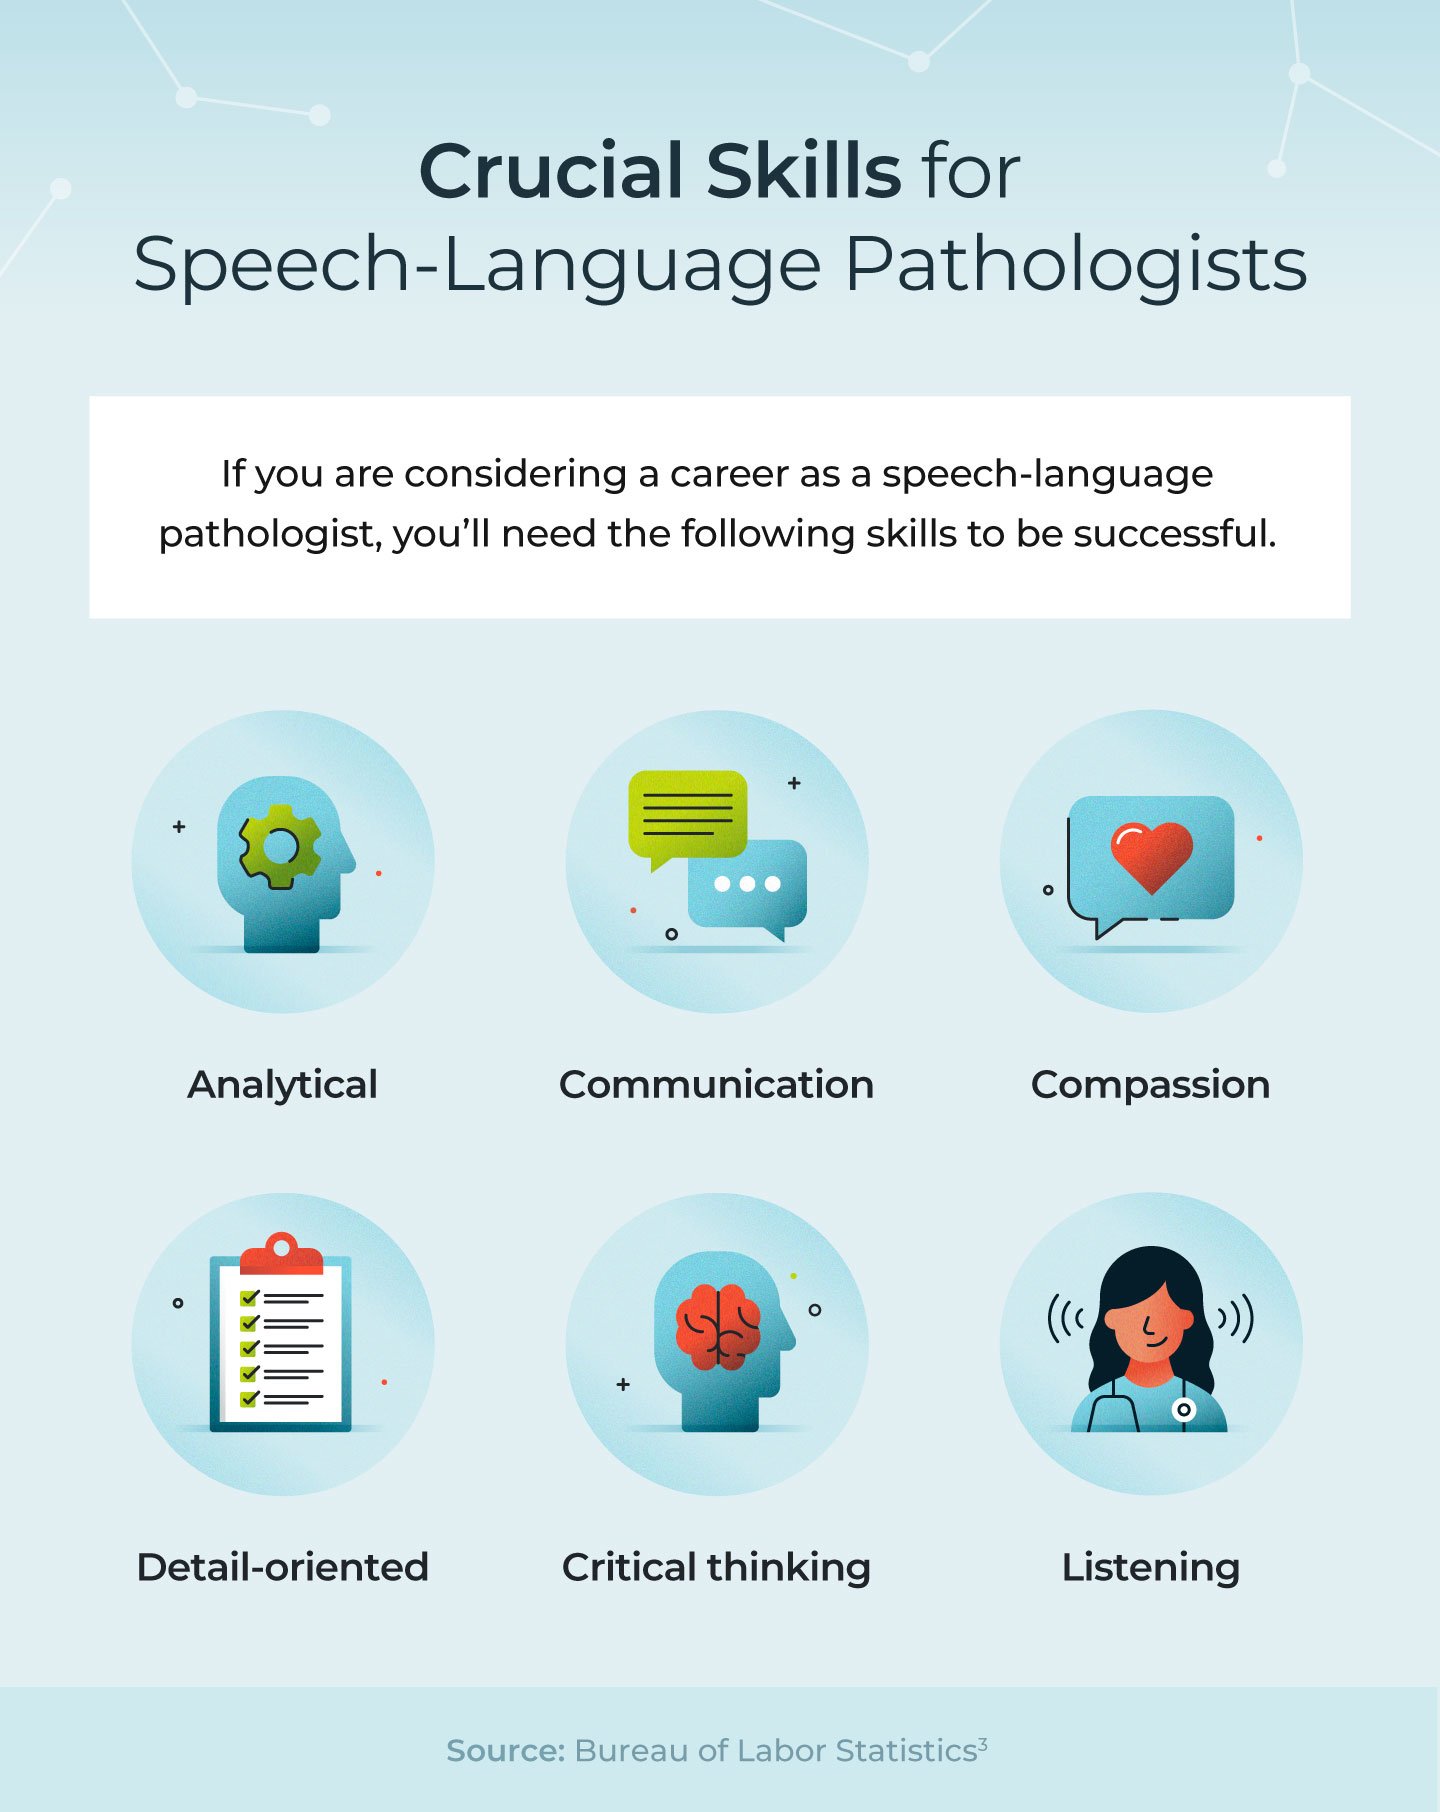 Key skills for speech-language pathologists.